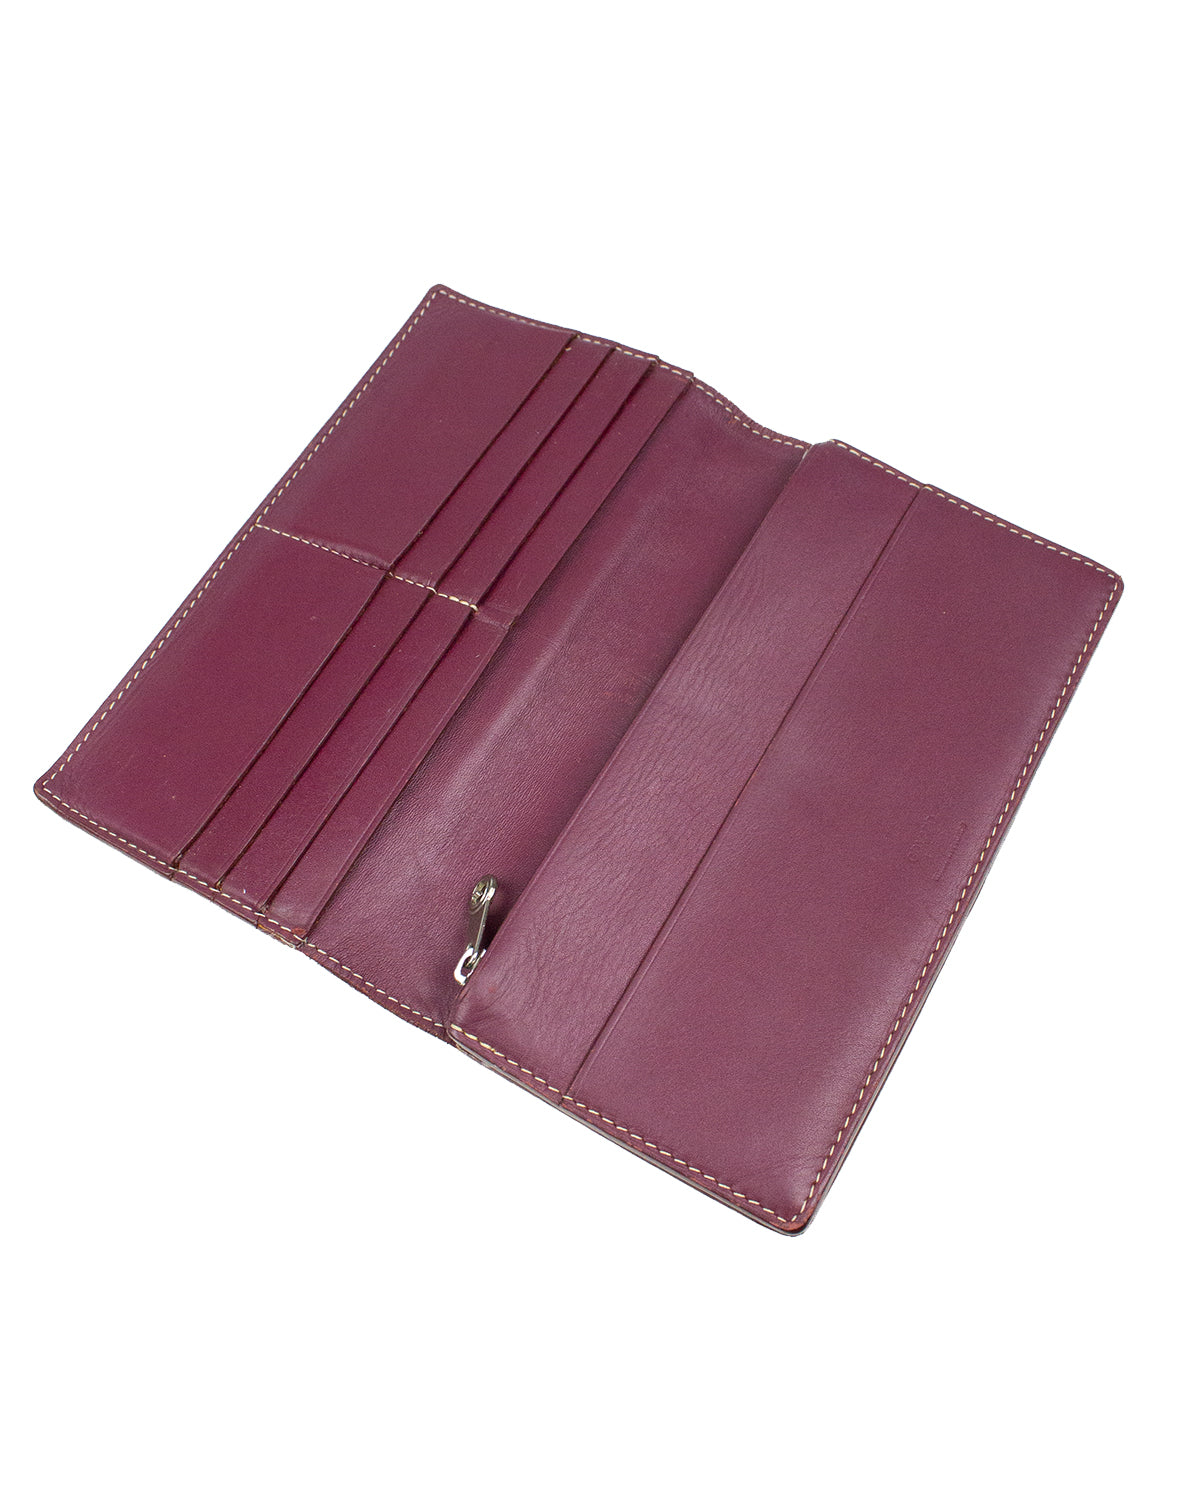 Goyard Wallet from ScarlettLuxury : r/DesignerReps